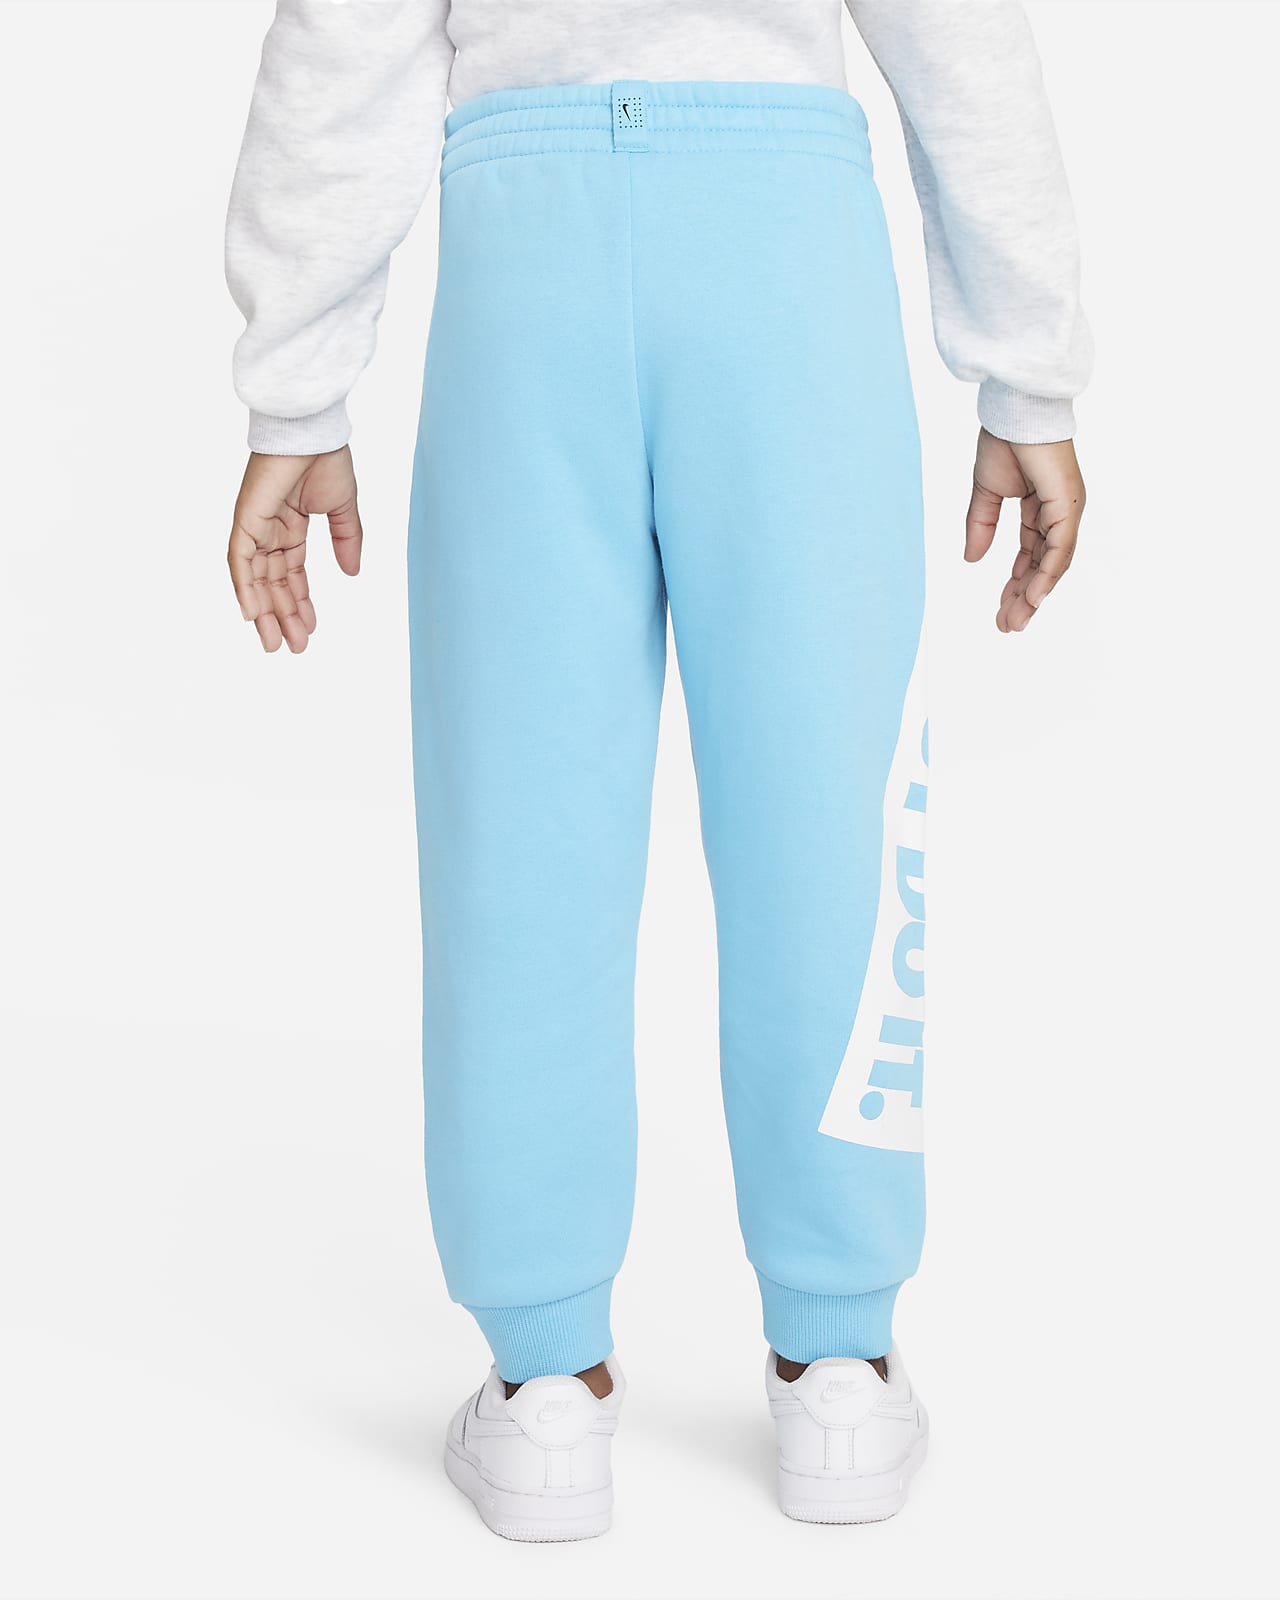 Yoga Bear Women's Tee and Shorts Pajama Separates - Little Blue